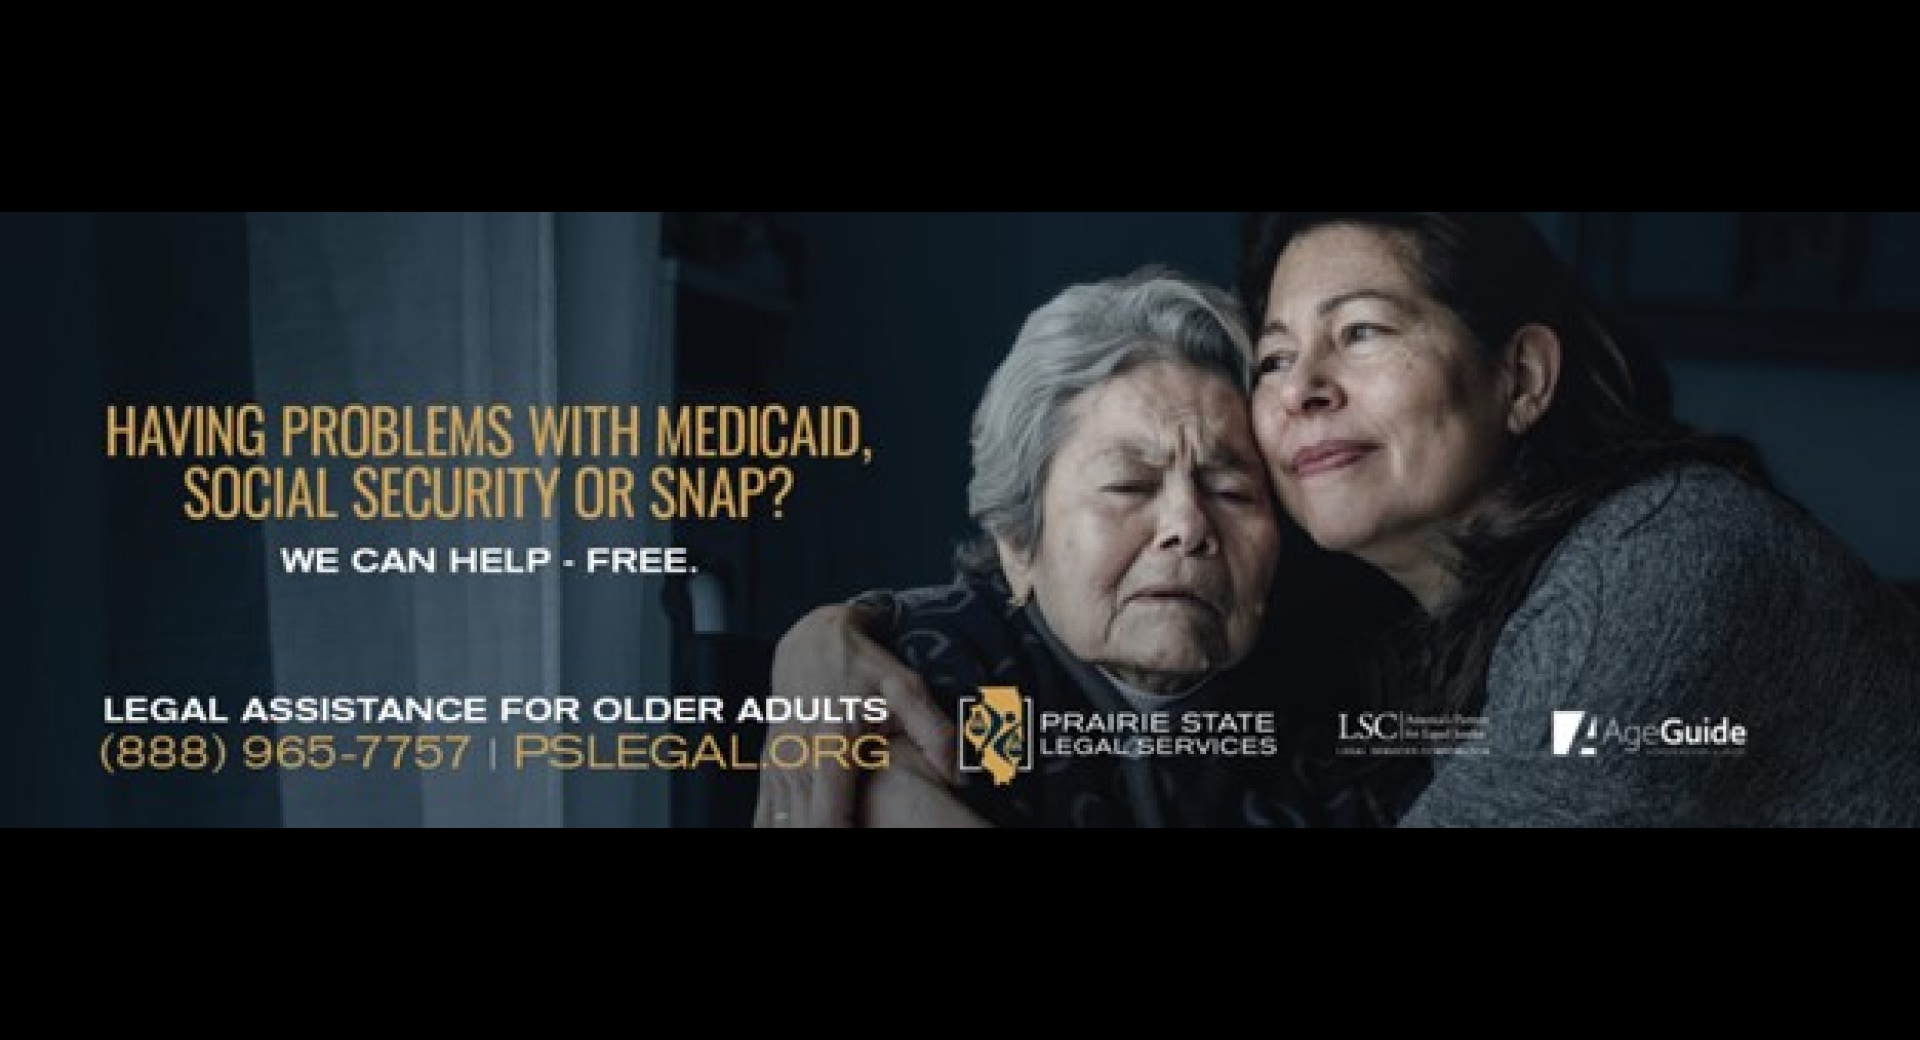 Regional Billboard Campaign Seeks to Help Older Adults